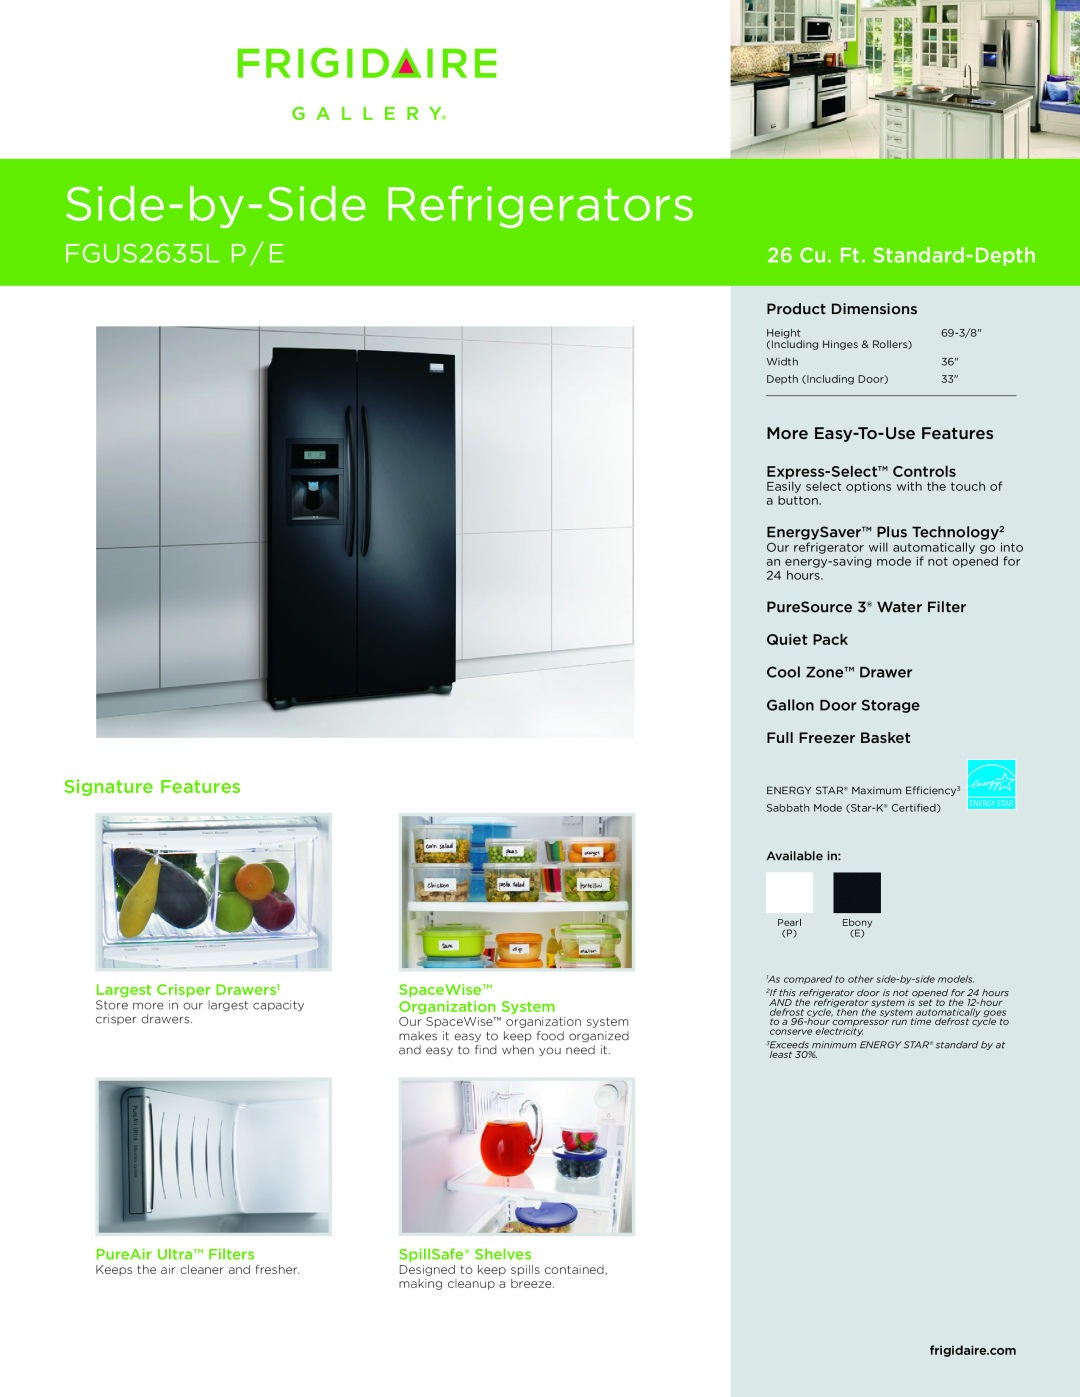 Frigidaire FGUS2635L P/E dimensions Side-by-SideRefrigerators, FGUS2635L P / E, 26 Cu. Ft. Standard-Depth, SpaceWise 